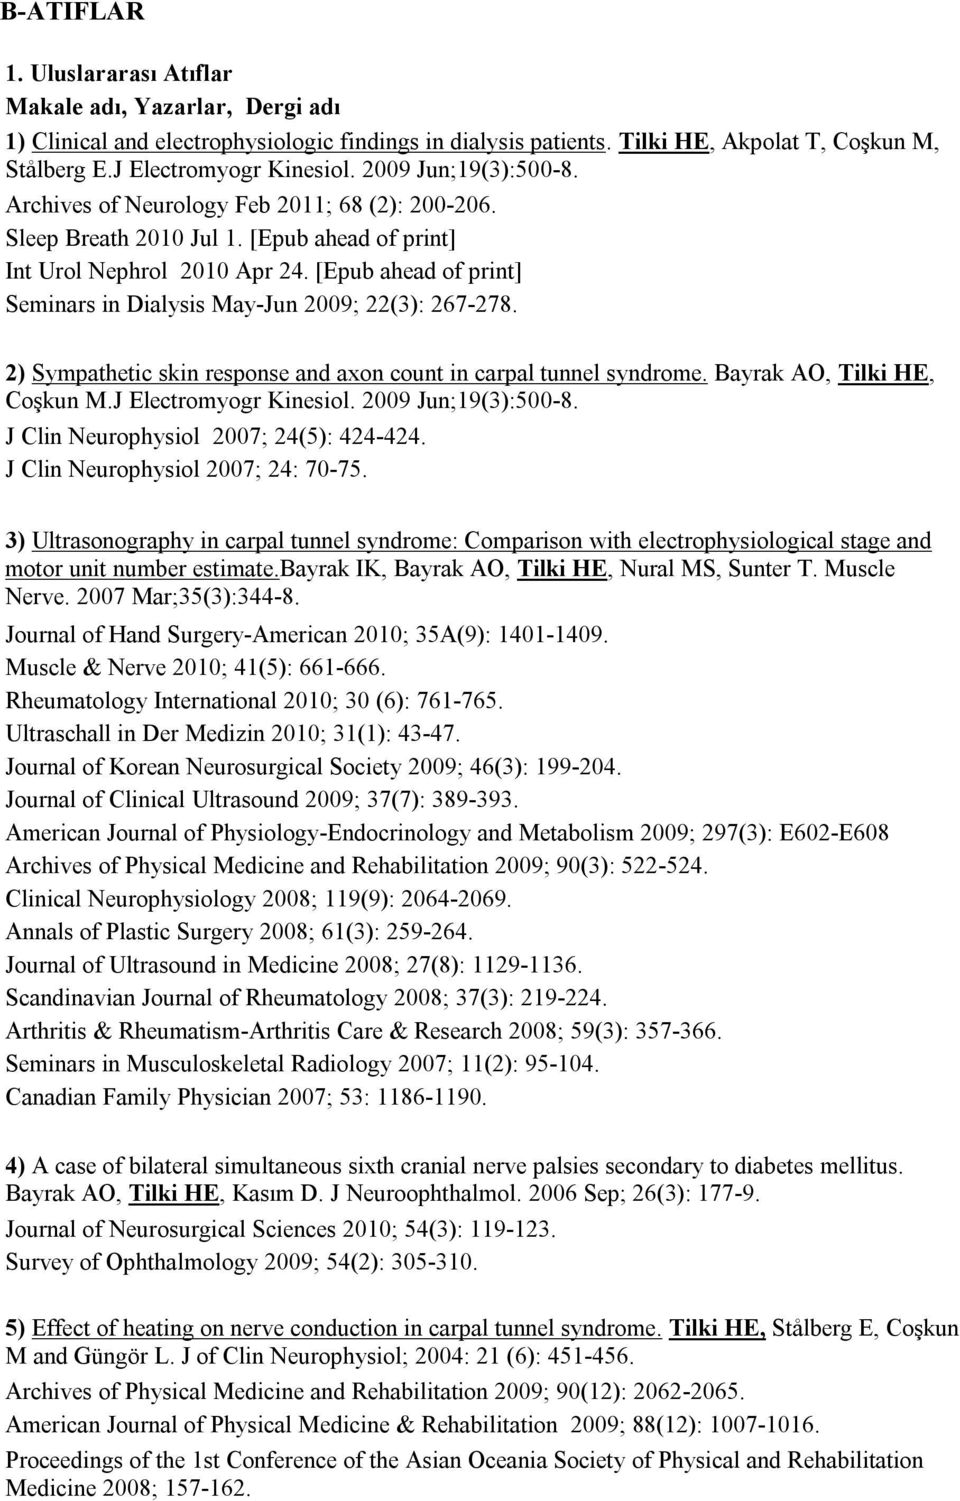 2) Sympathetic skin response and axon count in carpal tunnel syndrome. Bayrak AO, Tilki HE, Coşkun M.J Electromyogr Kinesiol. 2009 Jun;19(3):500-8. J Clin Neurophysiol 2007; 24(5): 424-424.